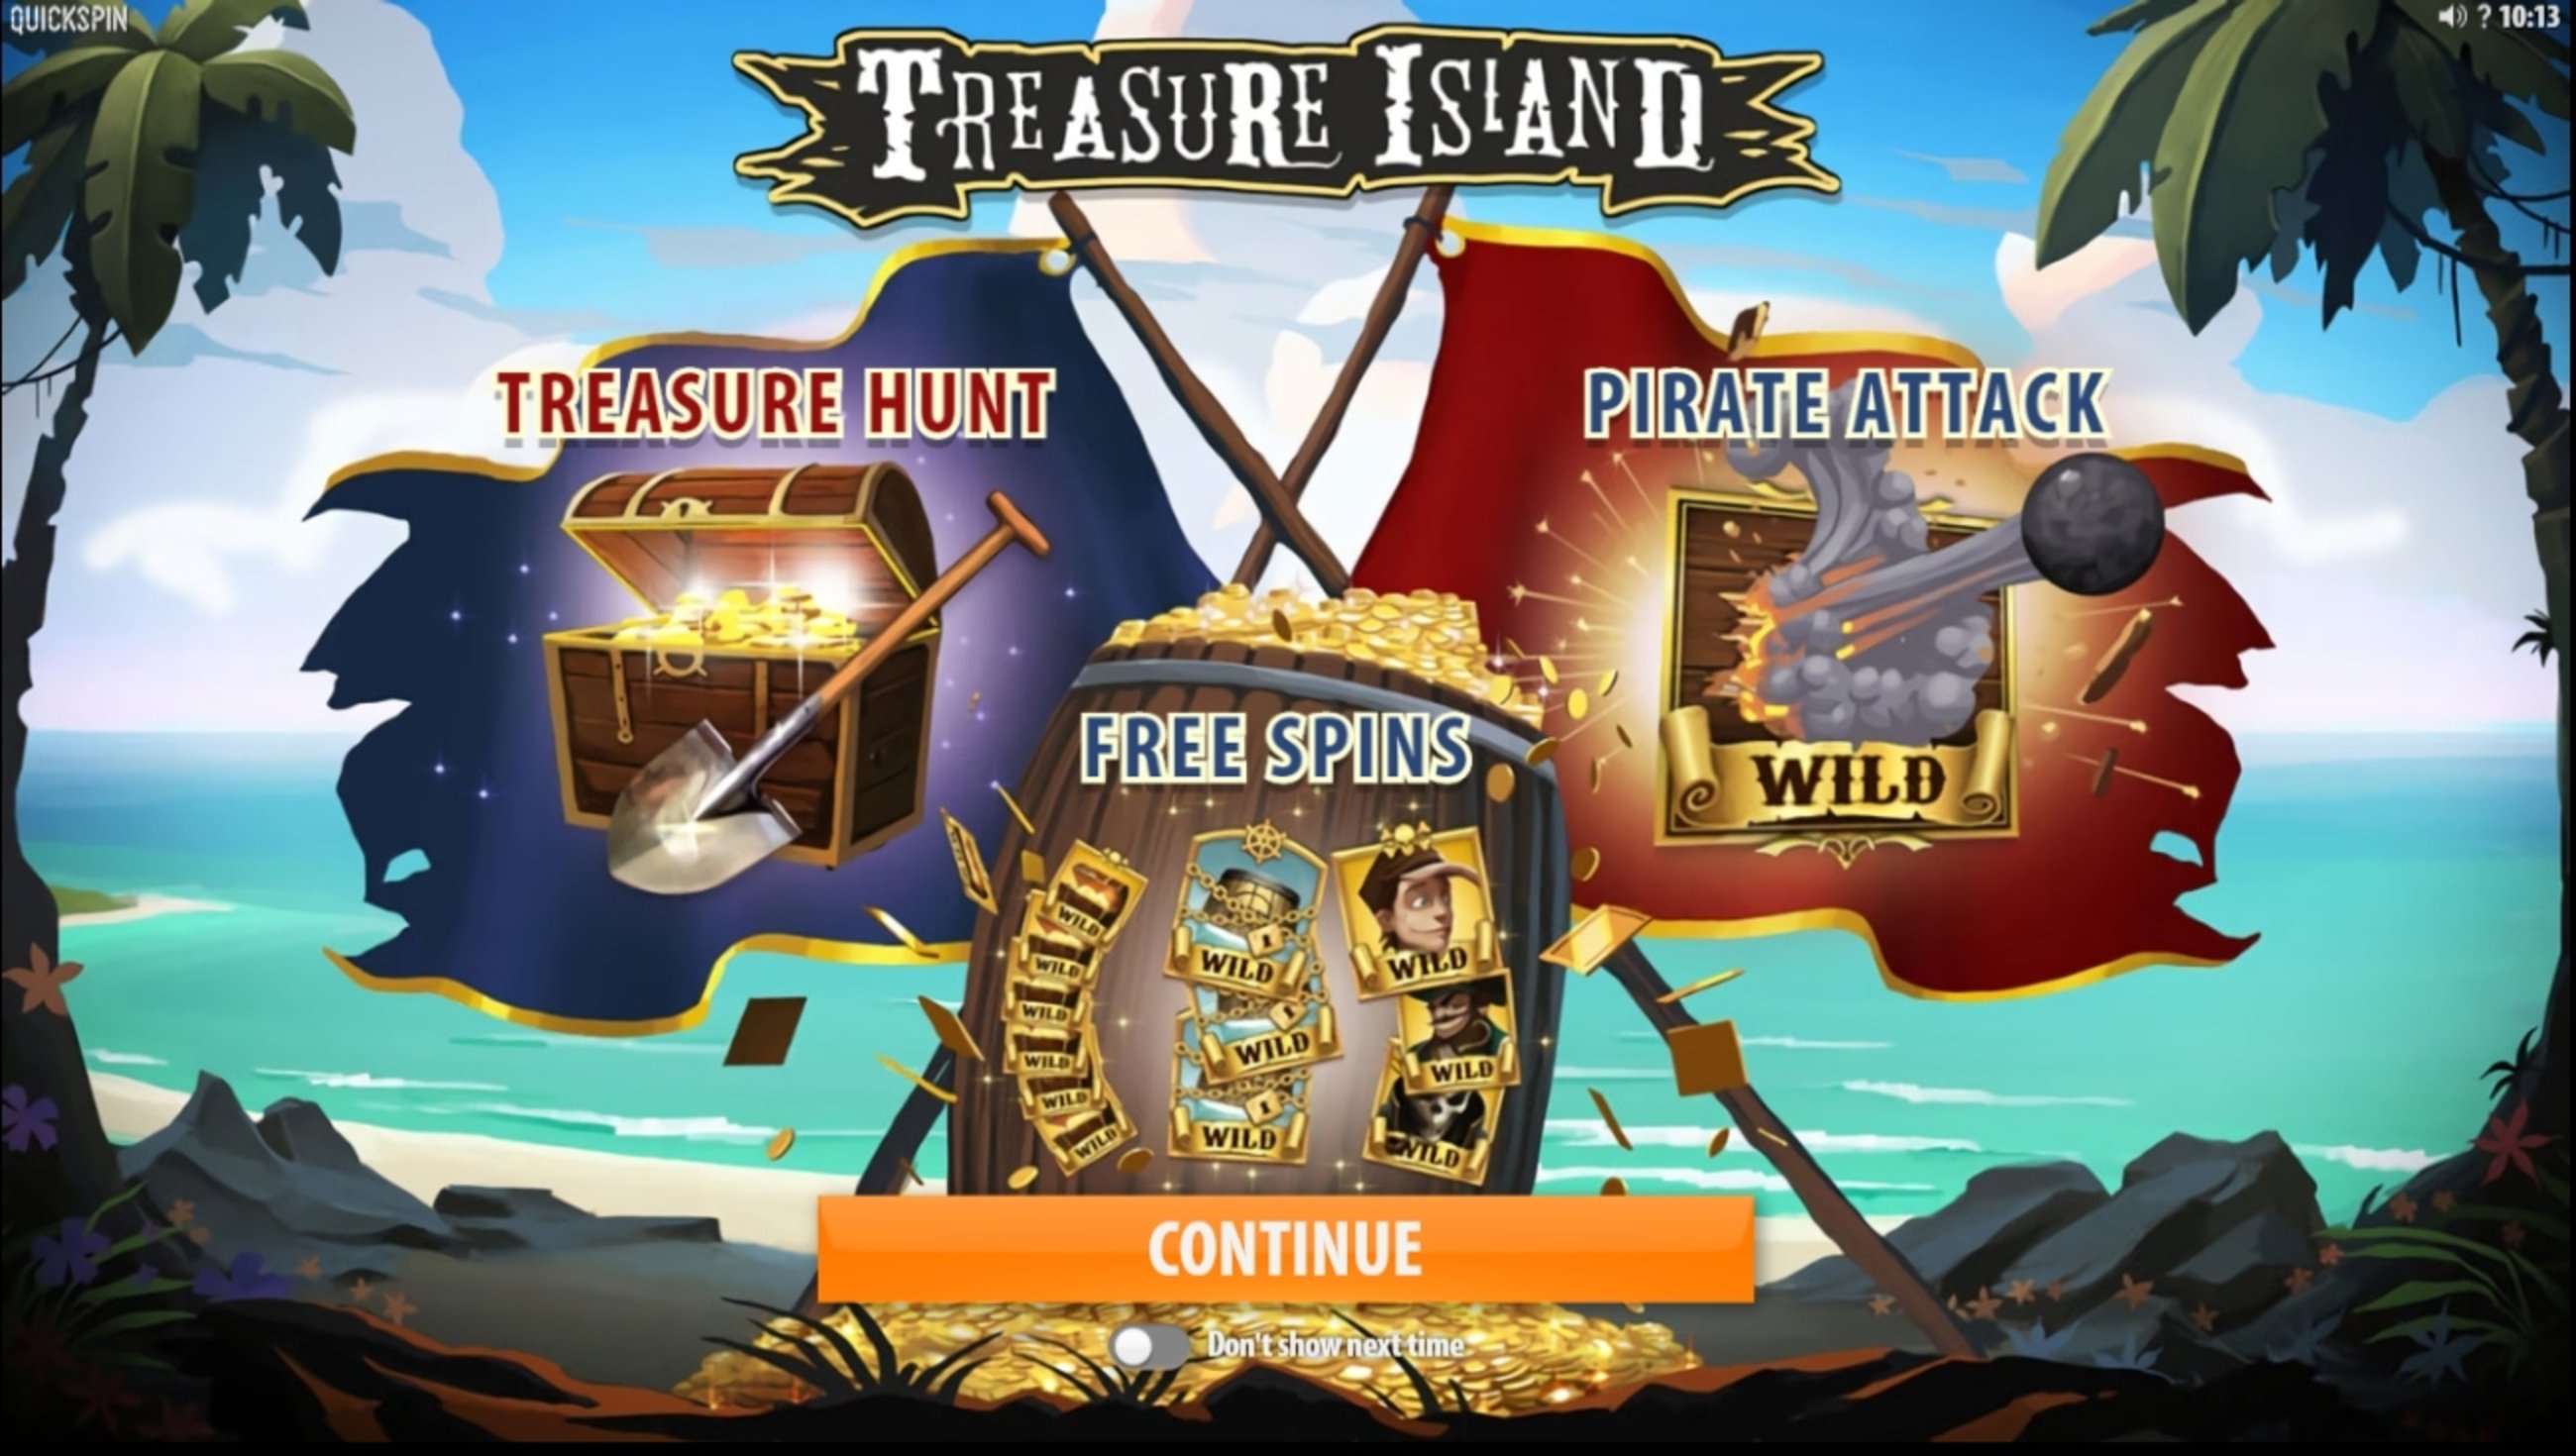 Play Treasure Island Free Casino Slot Game by Quickspin